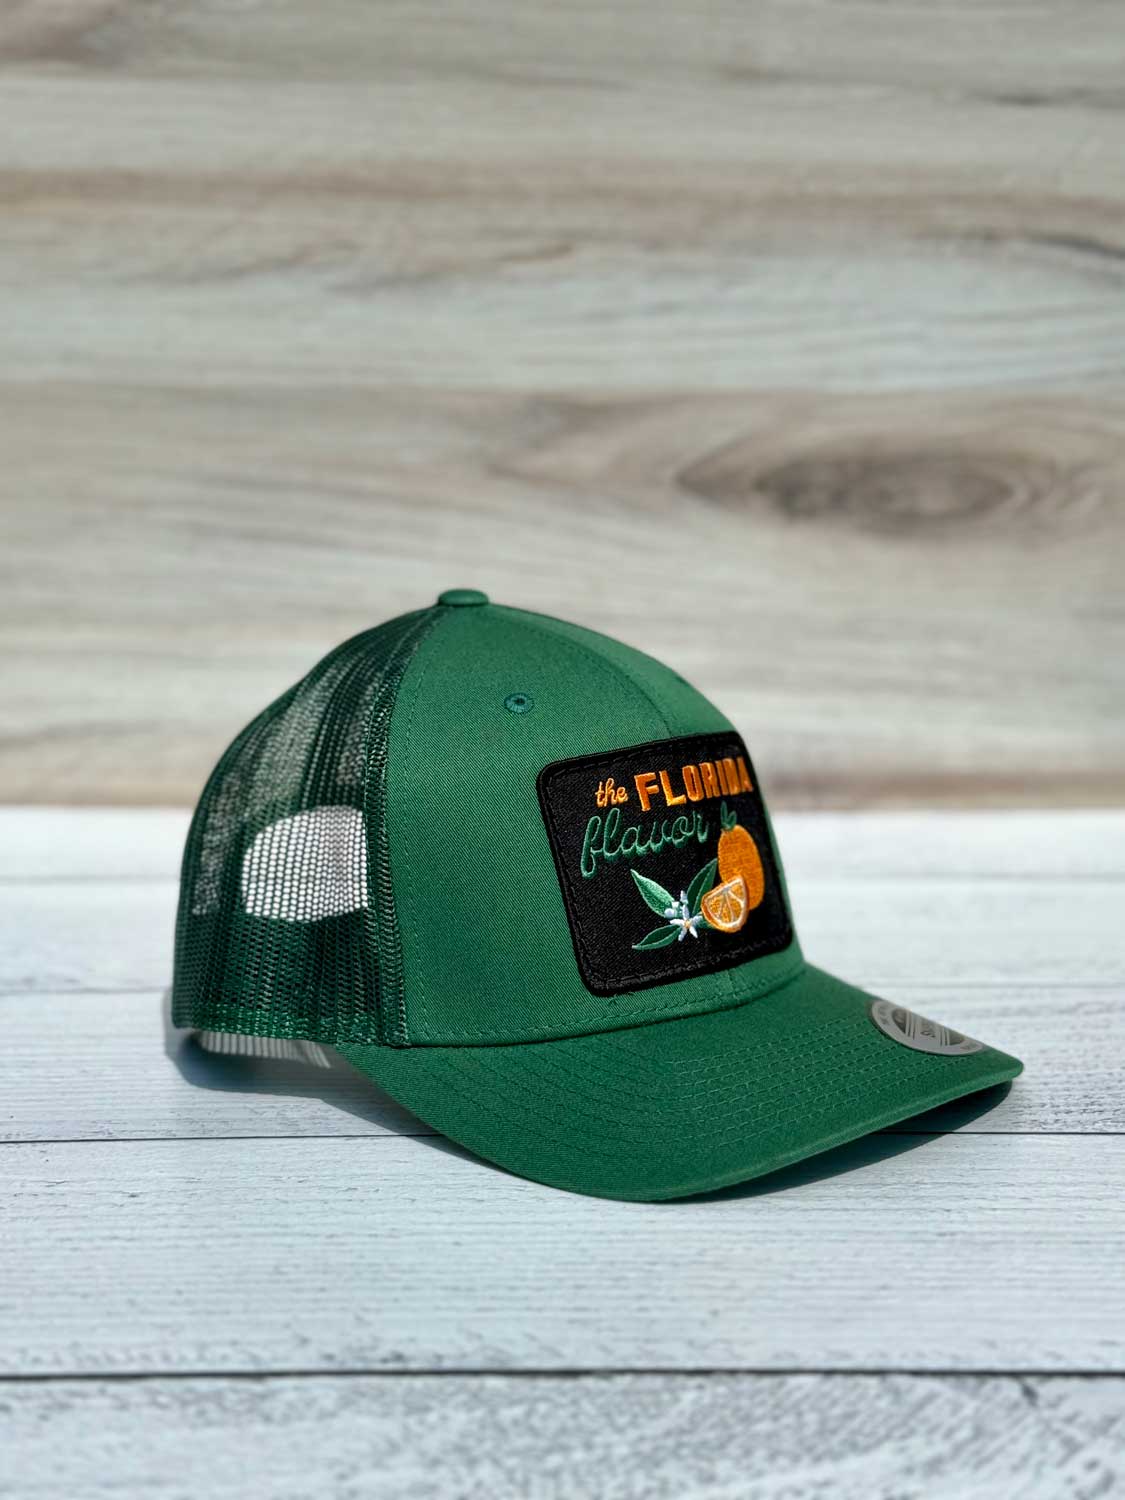 Florida Flavor: Orange Grove Green Hat